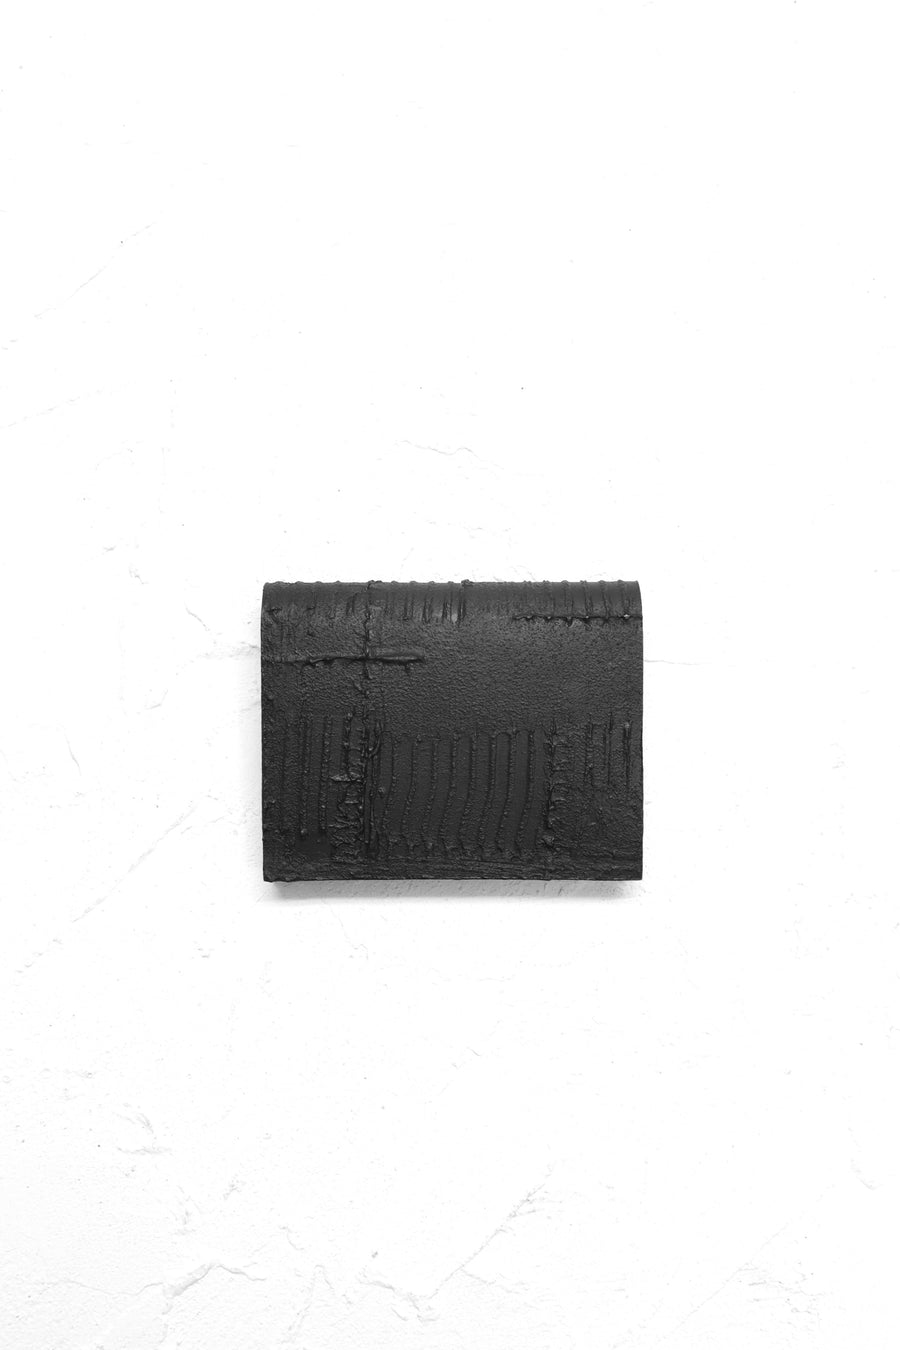 KAGARI YUSUKE  黒壁 二つ折り財布(mw-20) ※4月入荷予定予約品